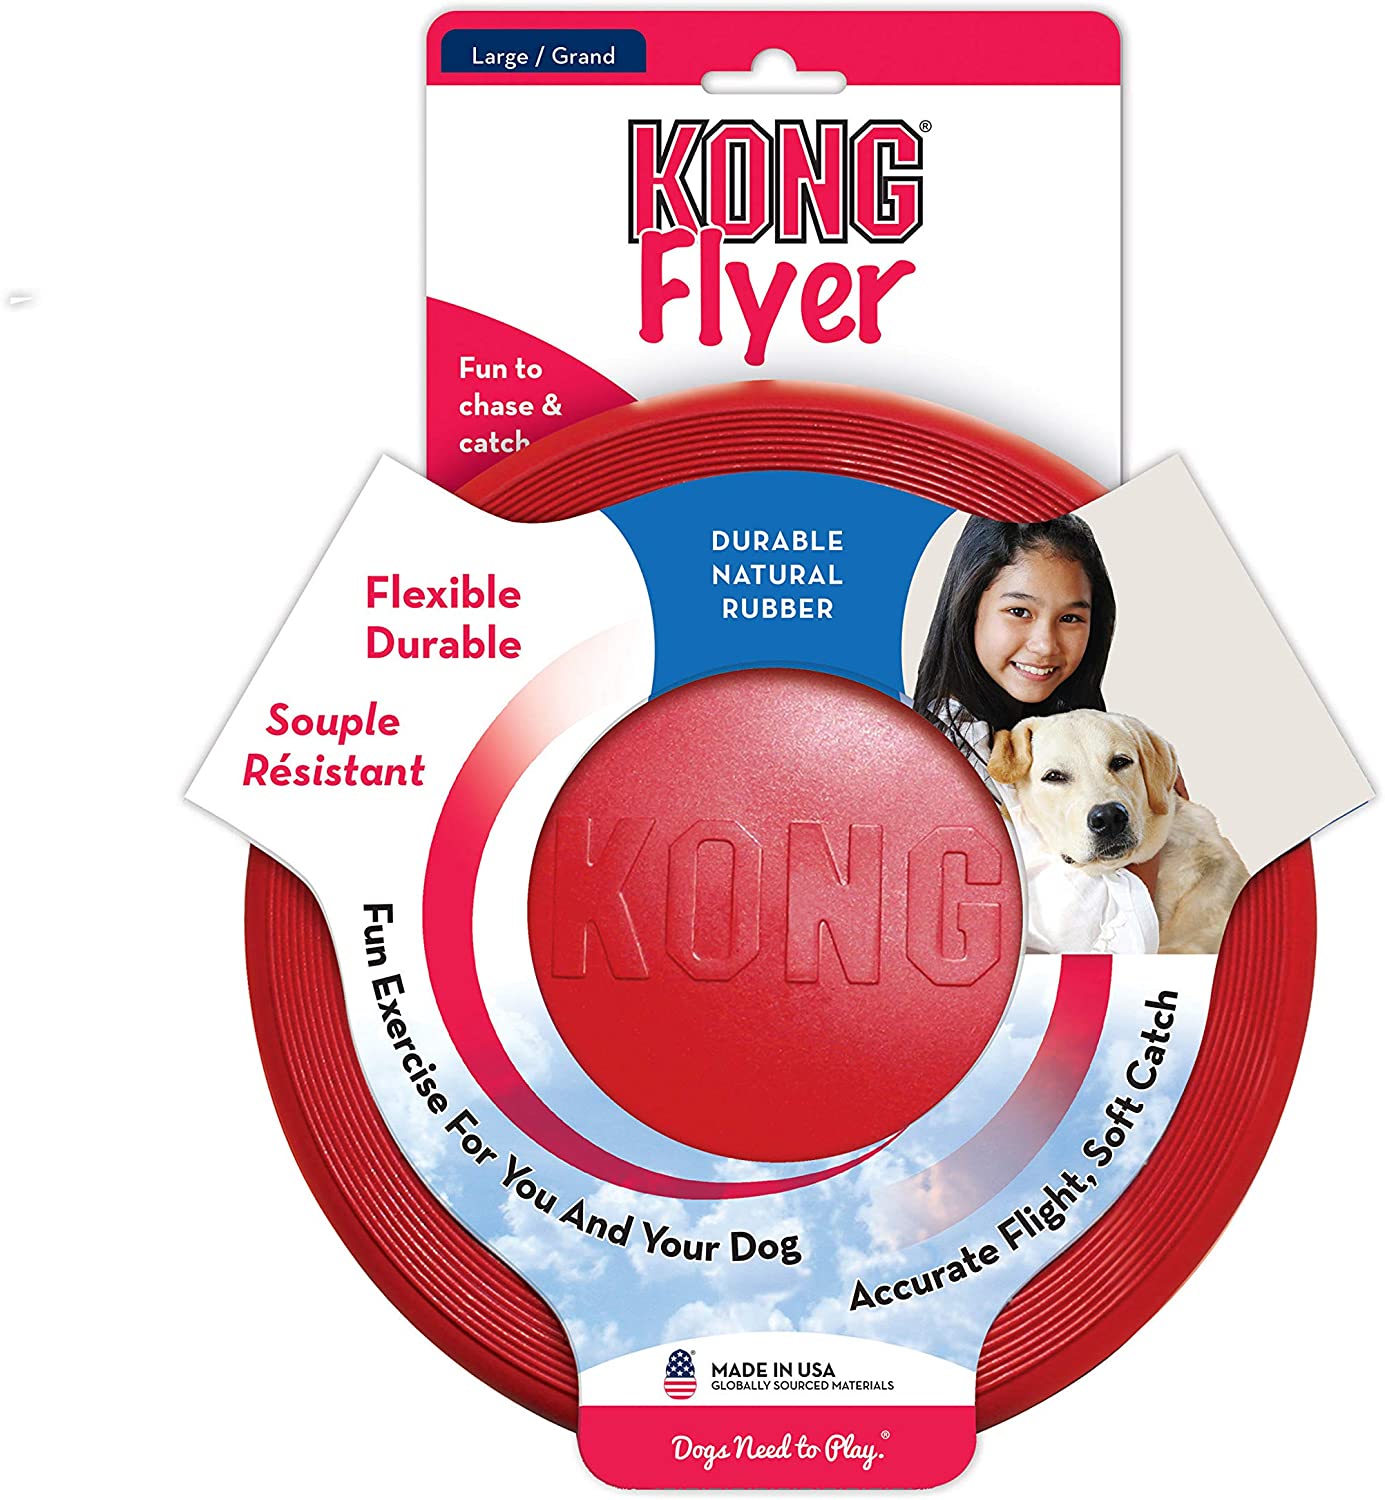  KONG - Flyer - Frisbee de caucho resistente - Raza grande 